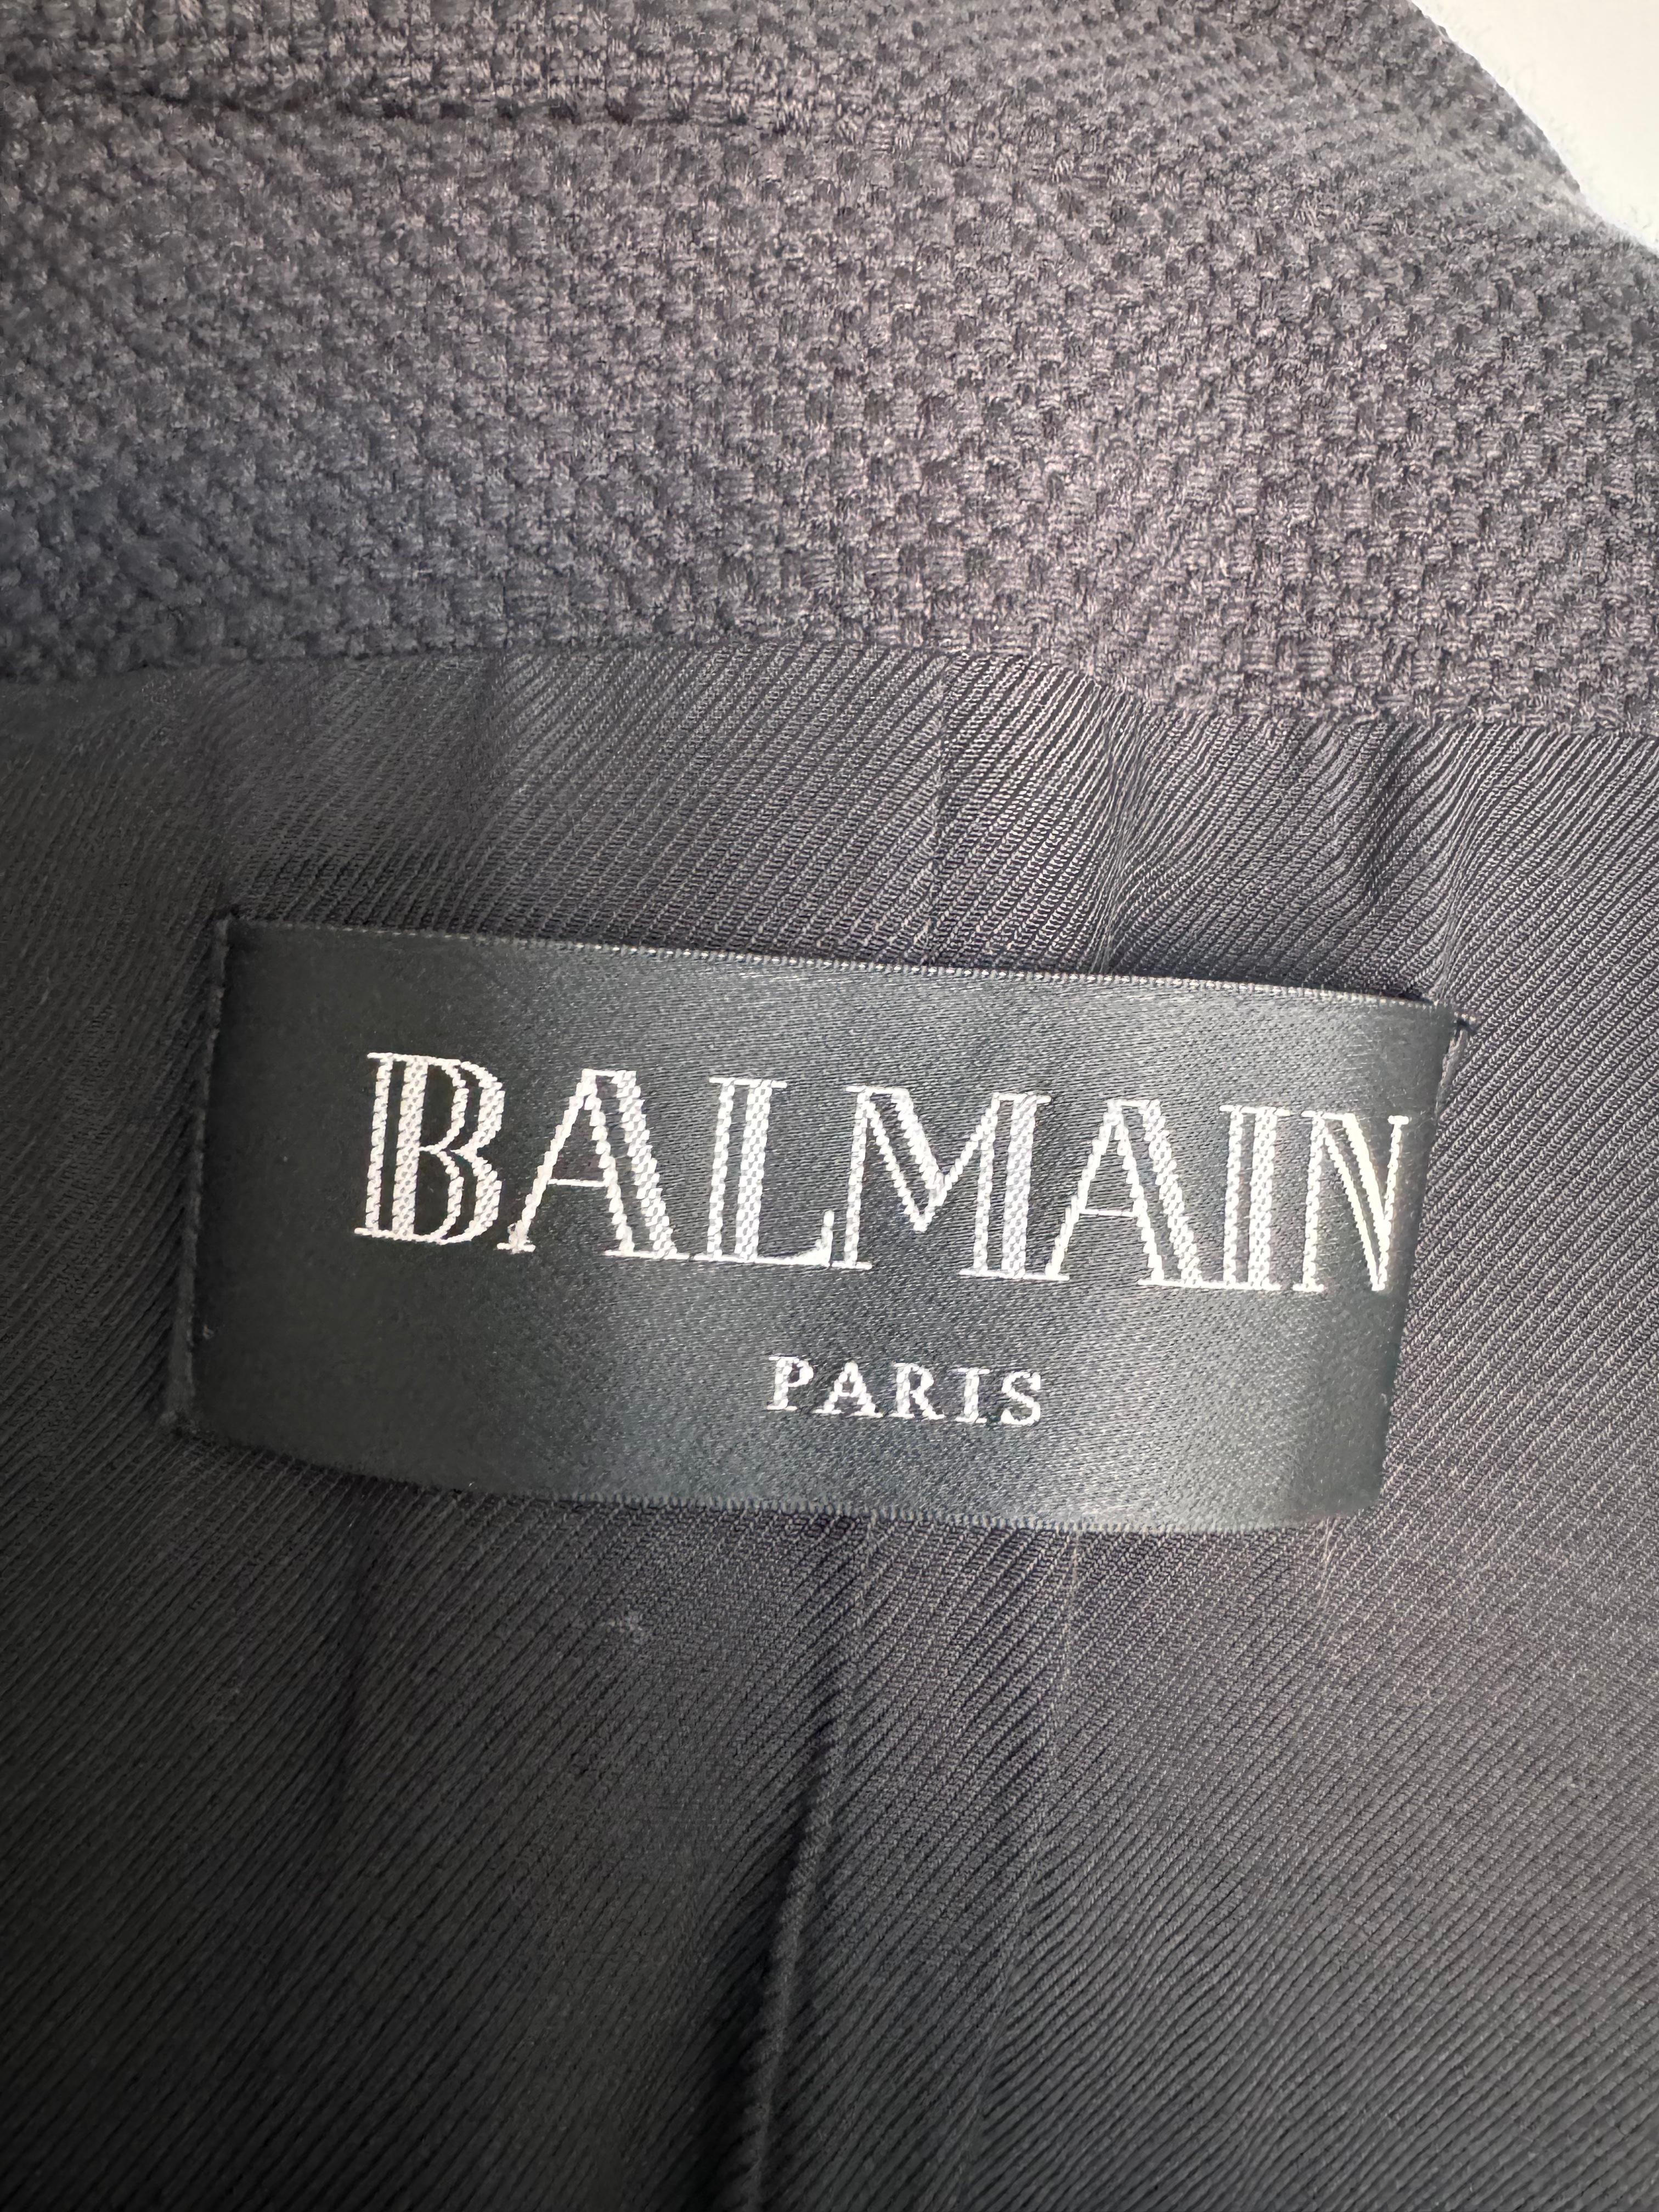 Balmain Classic Blazer  For Sale 1